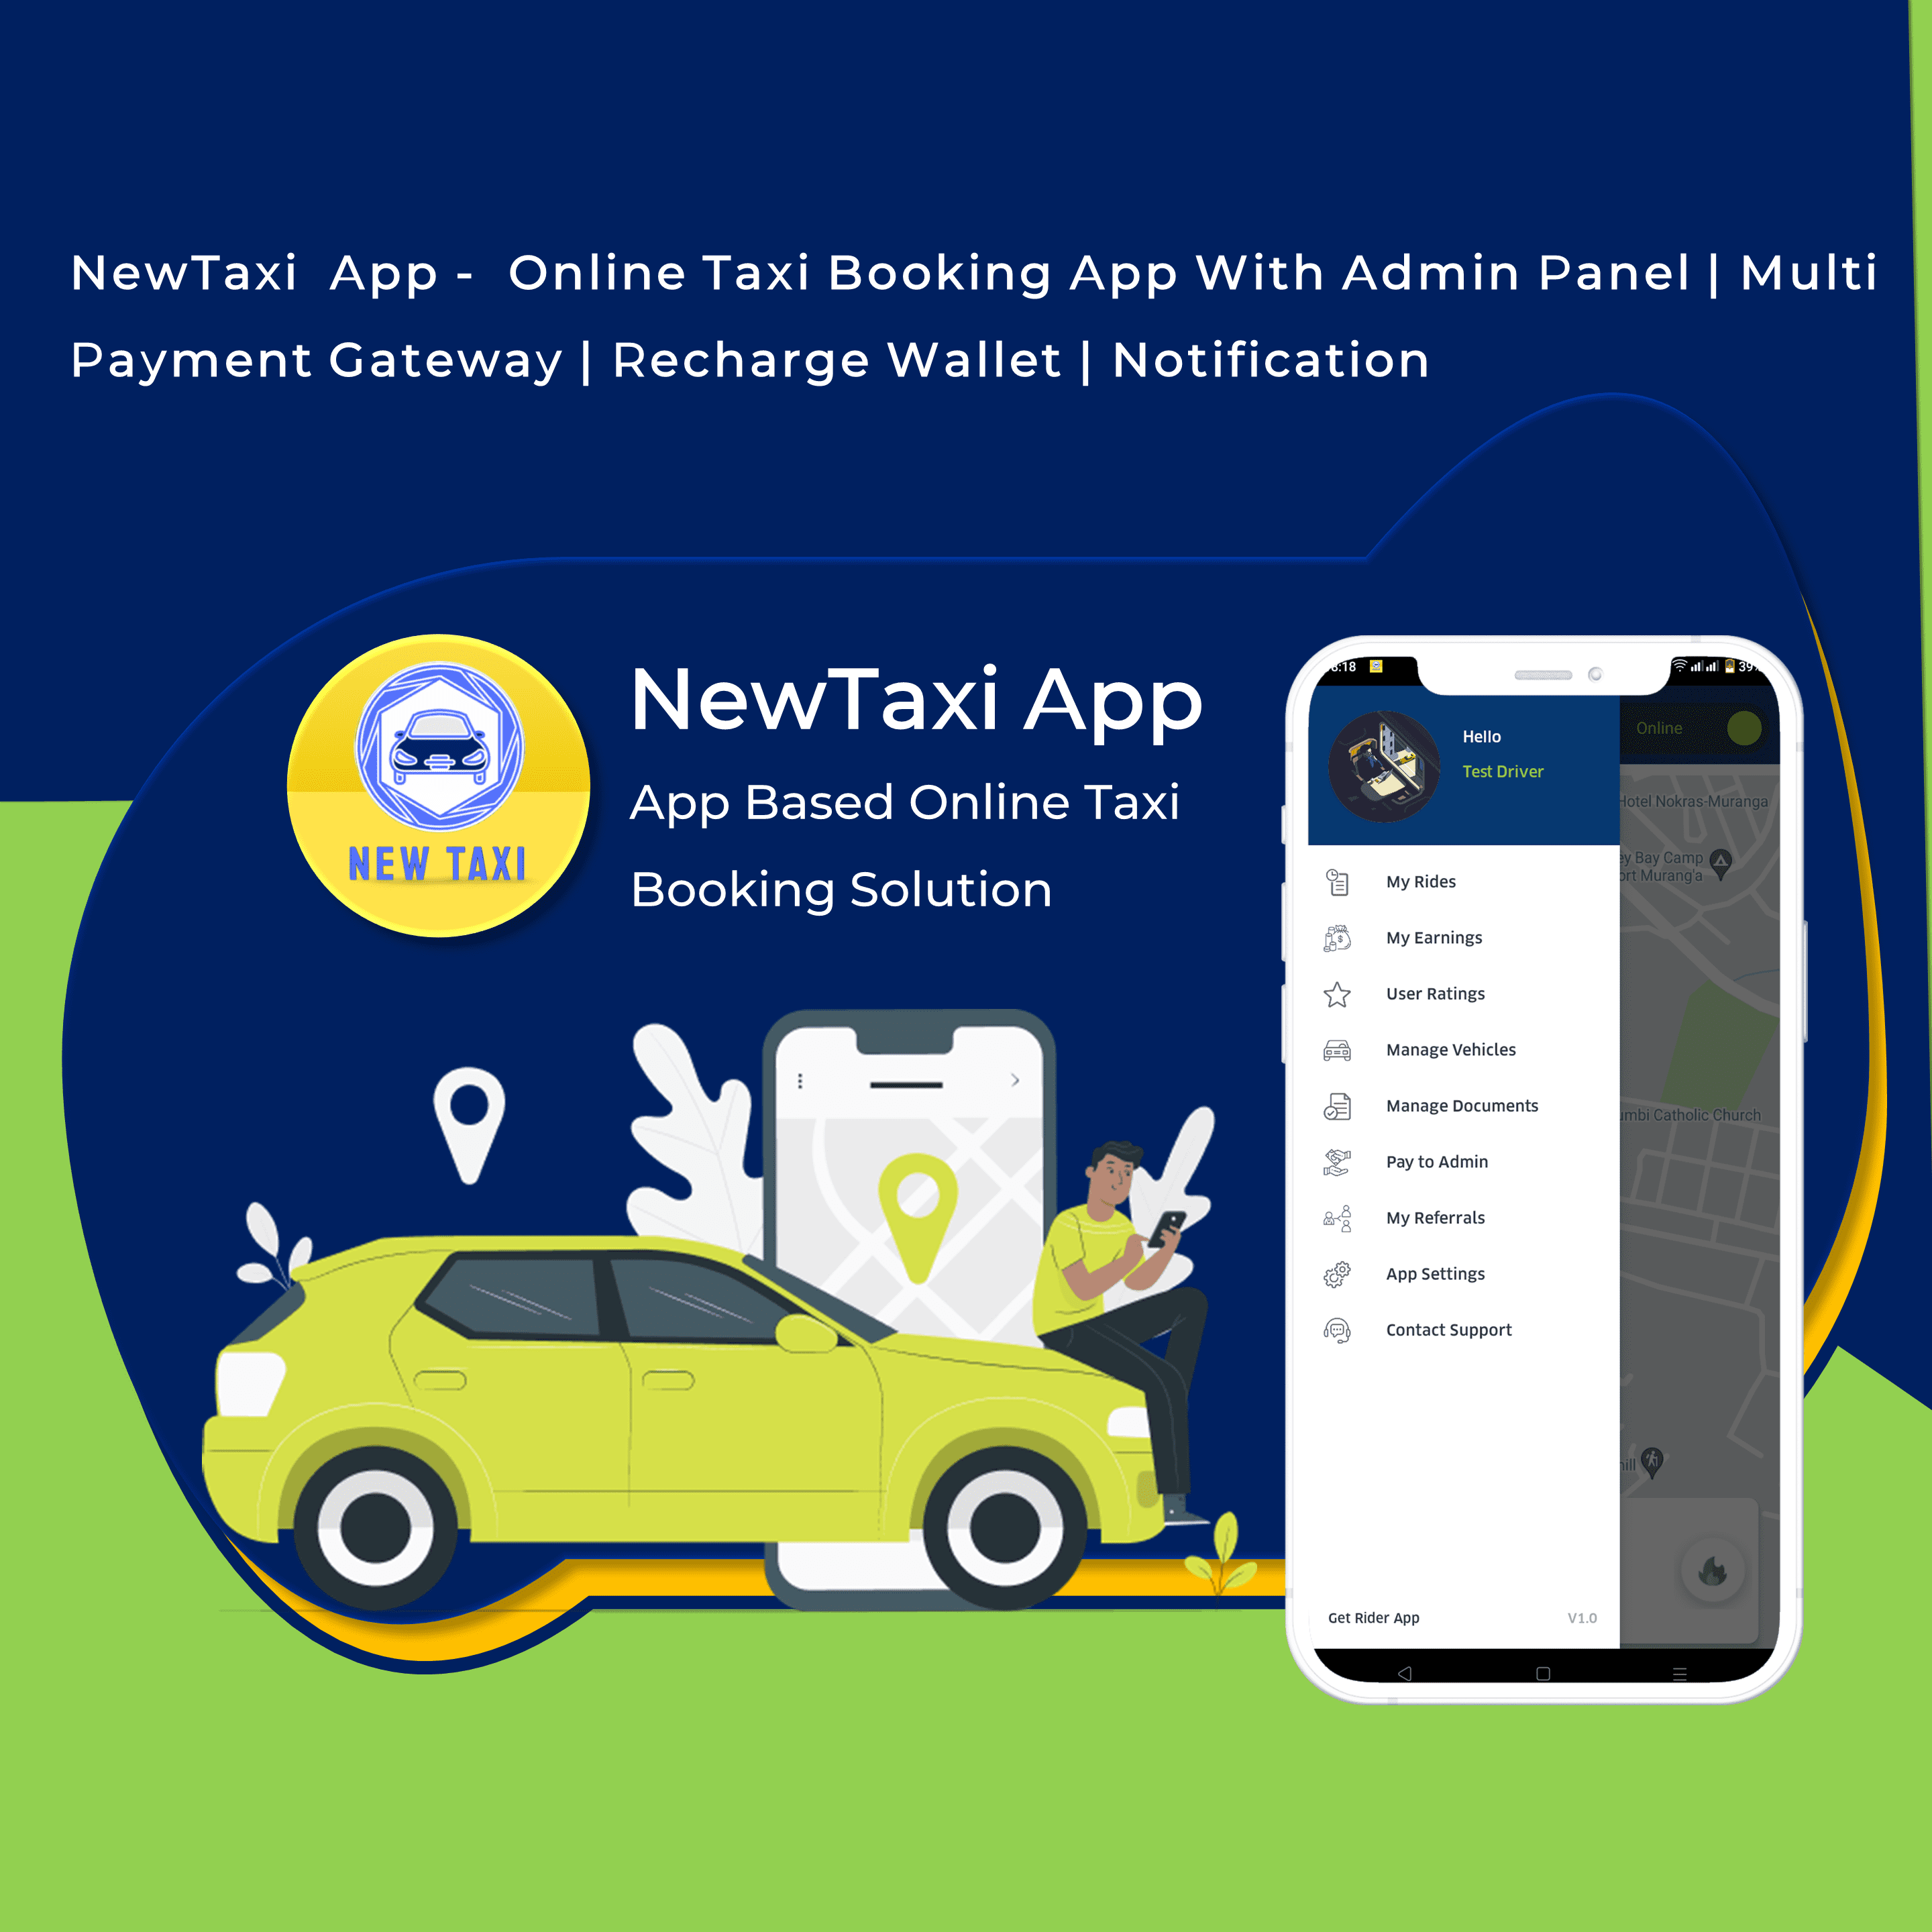 NewTaxi white label taxi app software script - 1